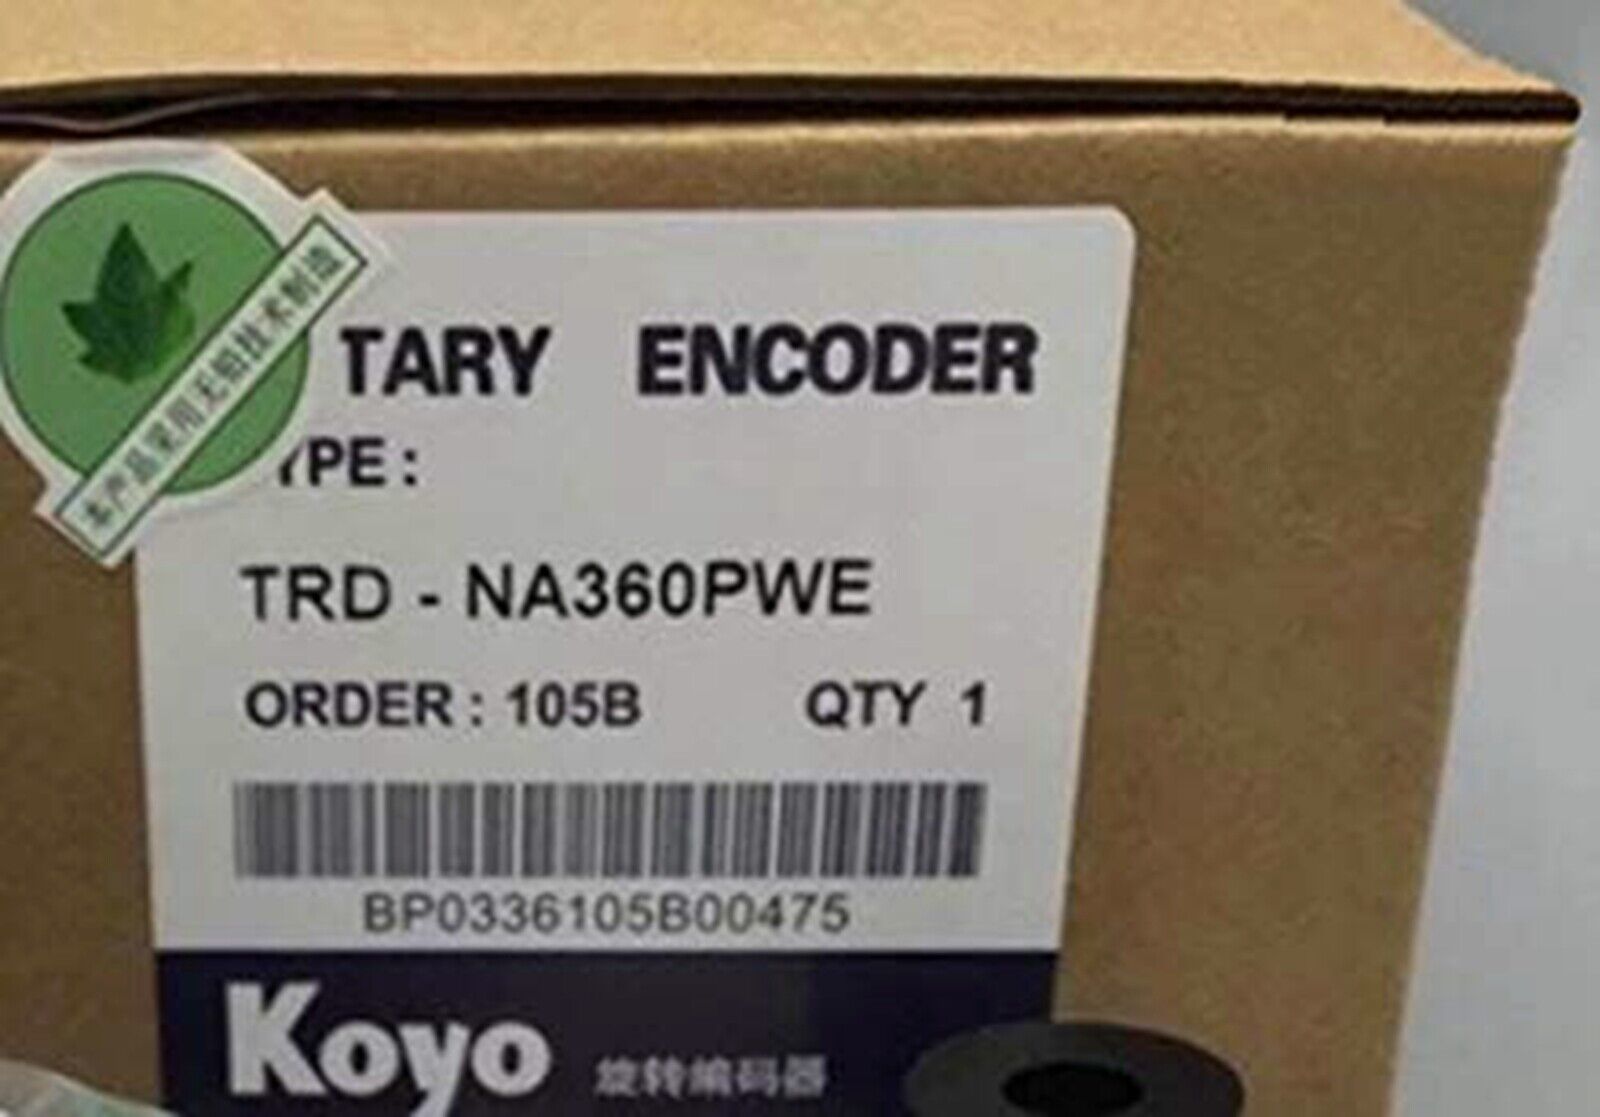 KOYO TRD-NA360PWE TRDNA360PWE Rotary Encoder